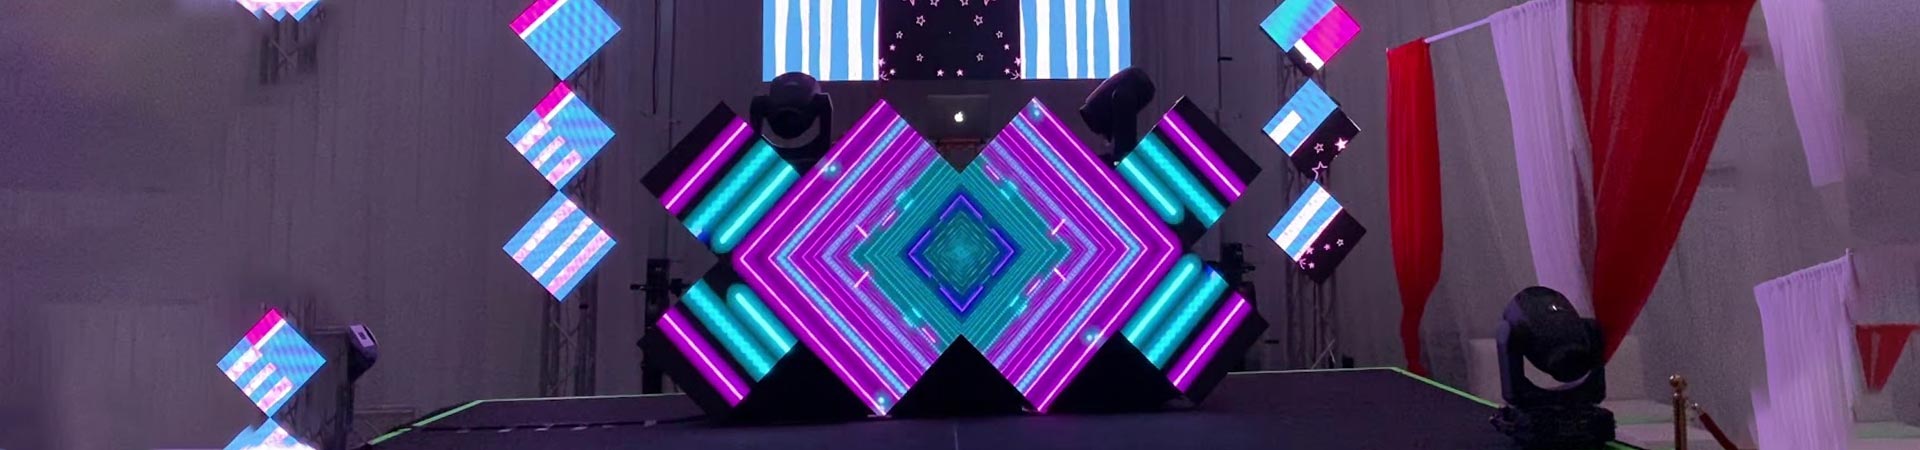 DJ Booth LED Screen Display Effect